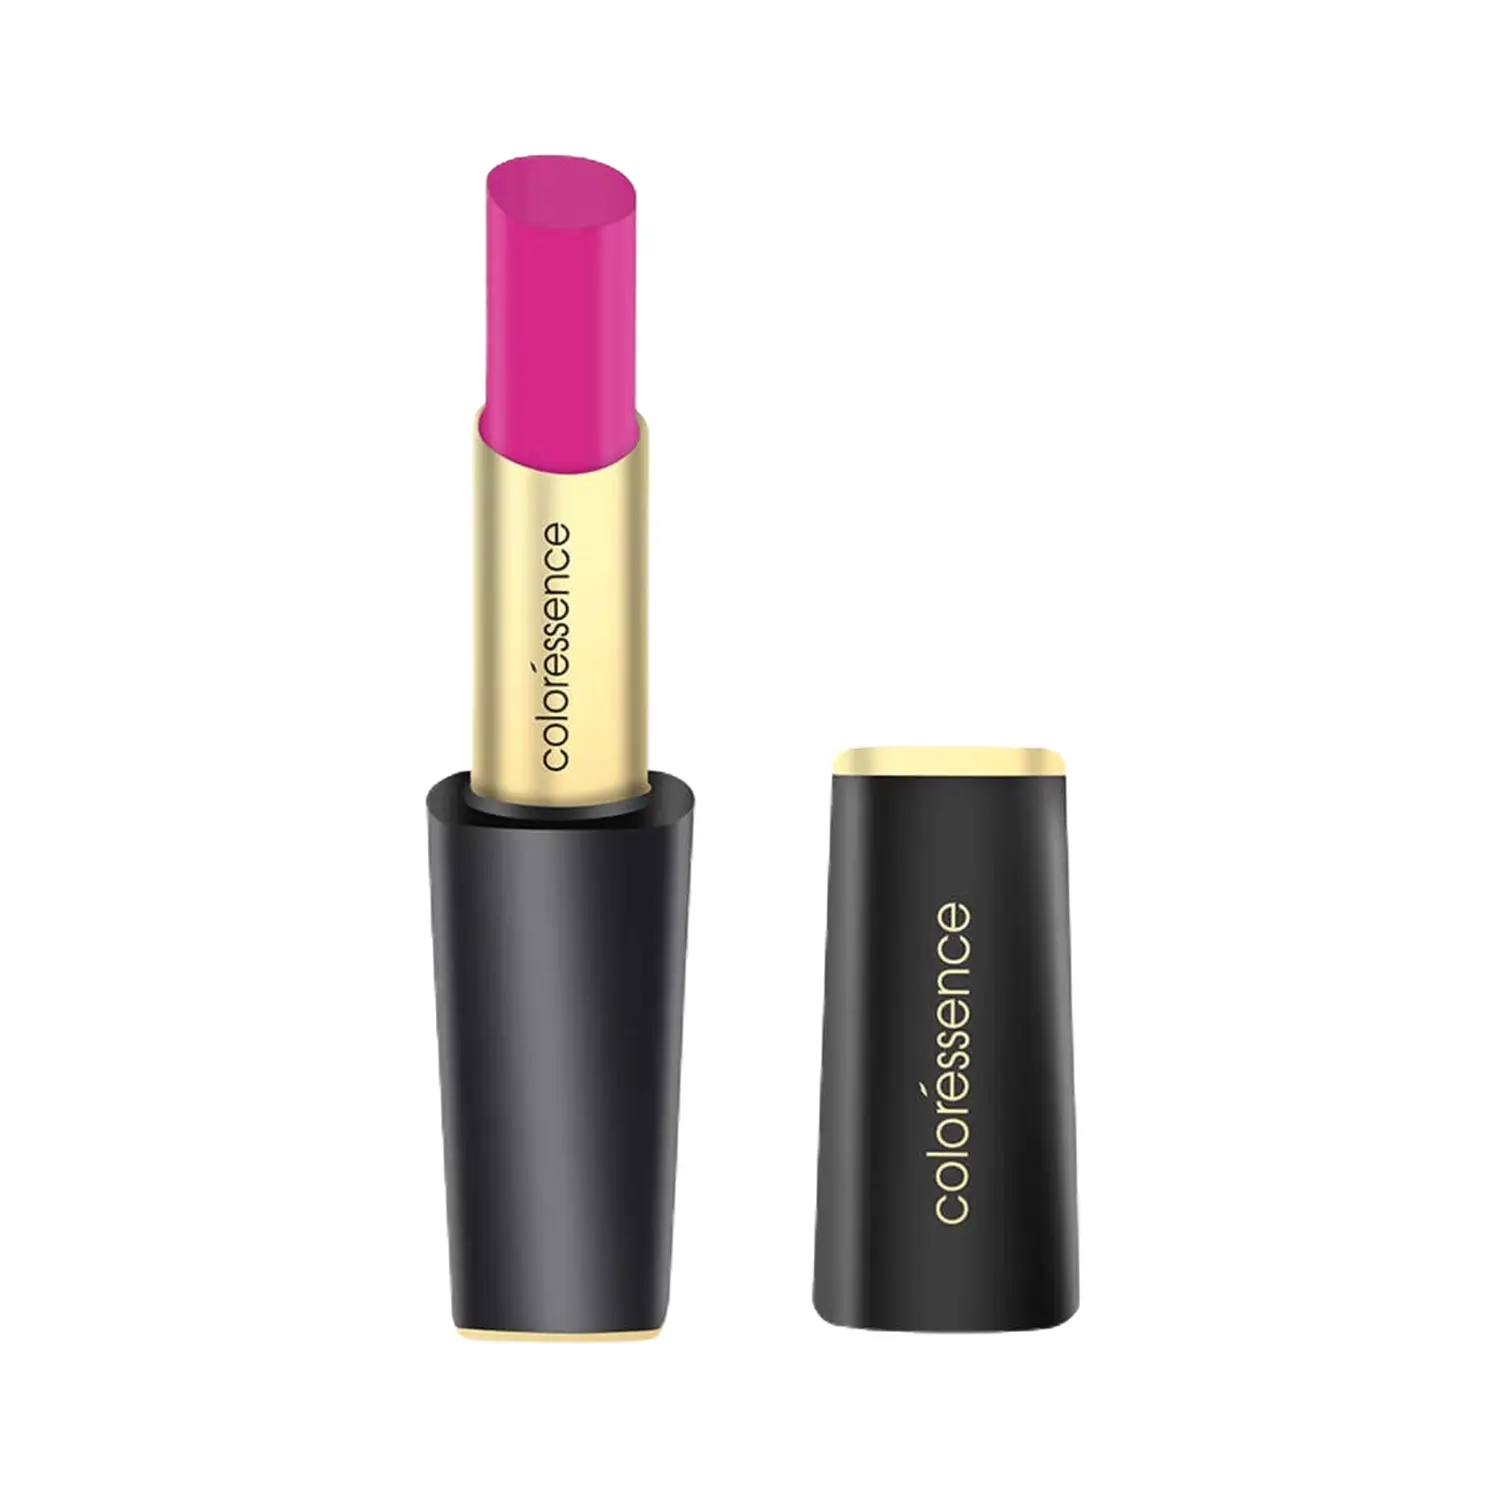 Coloressence | Coloressence Intense Long Wear Lip Color Glossy Lipstick - Sin (2.5g)